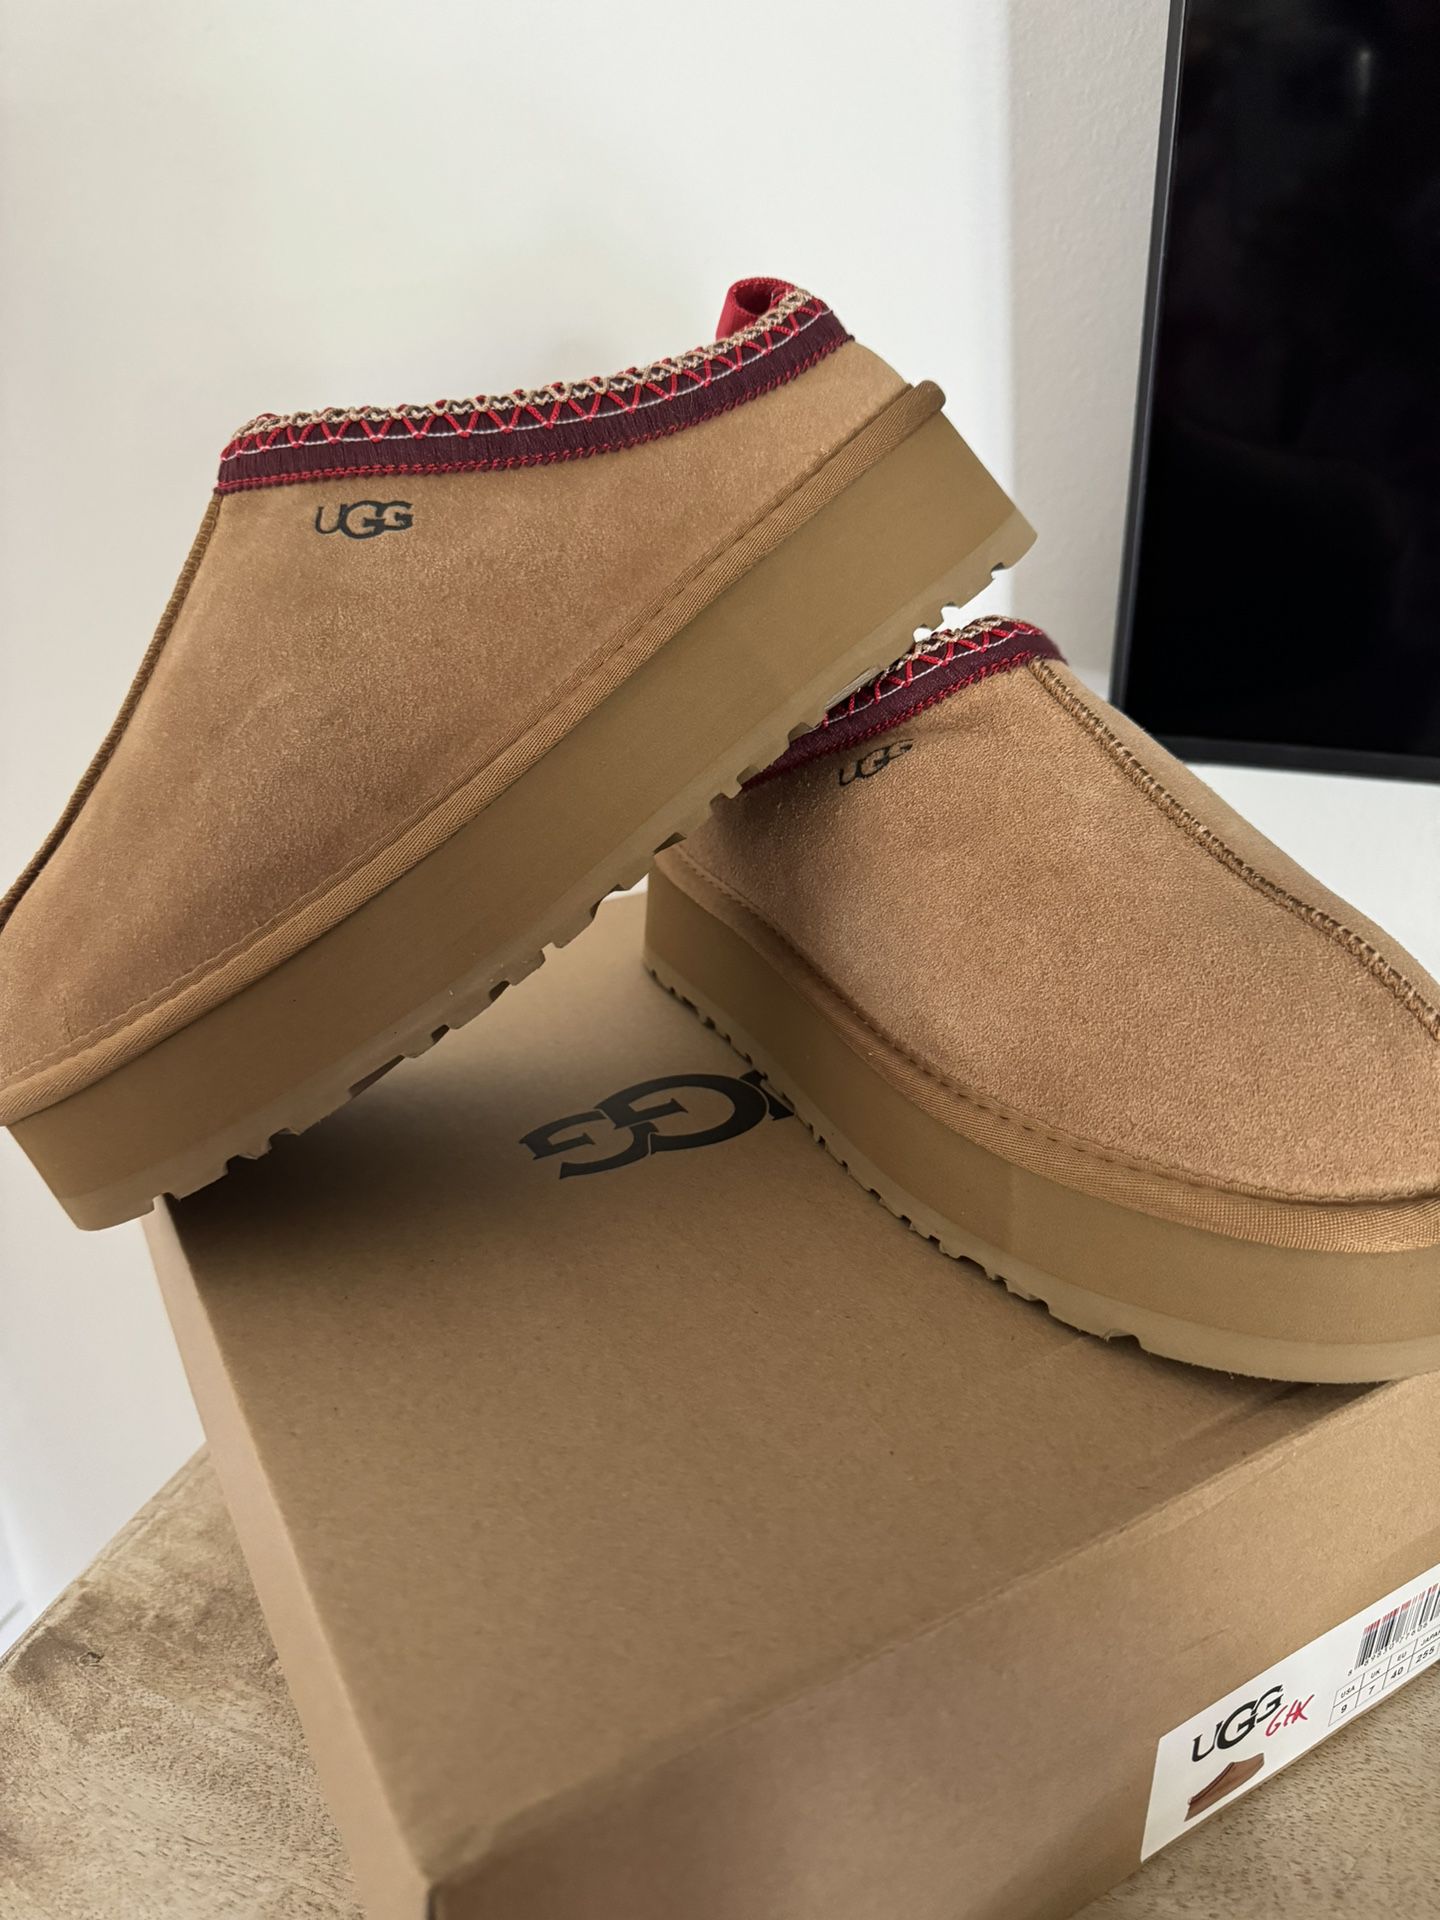 Ugg Taz slippers brand new never worn  Size 9